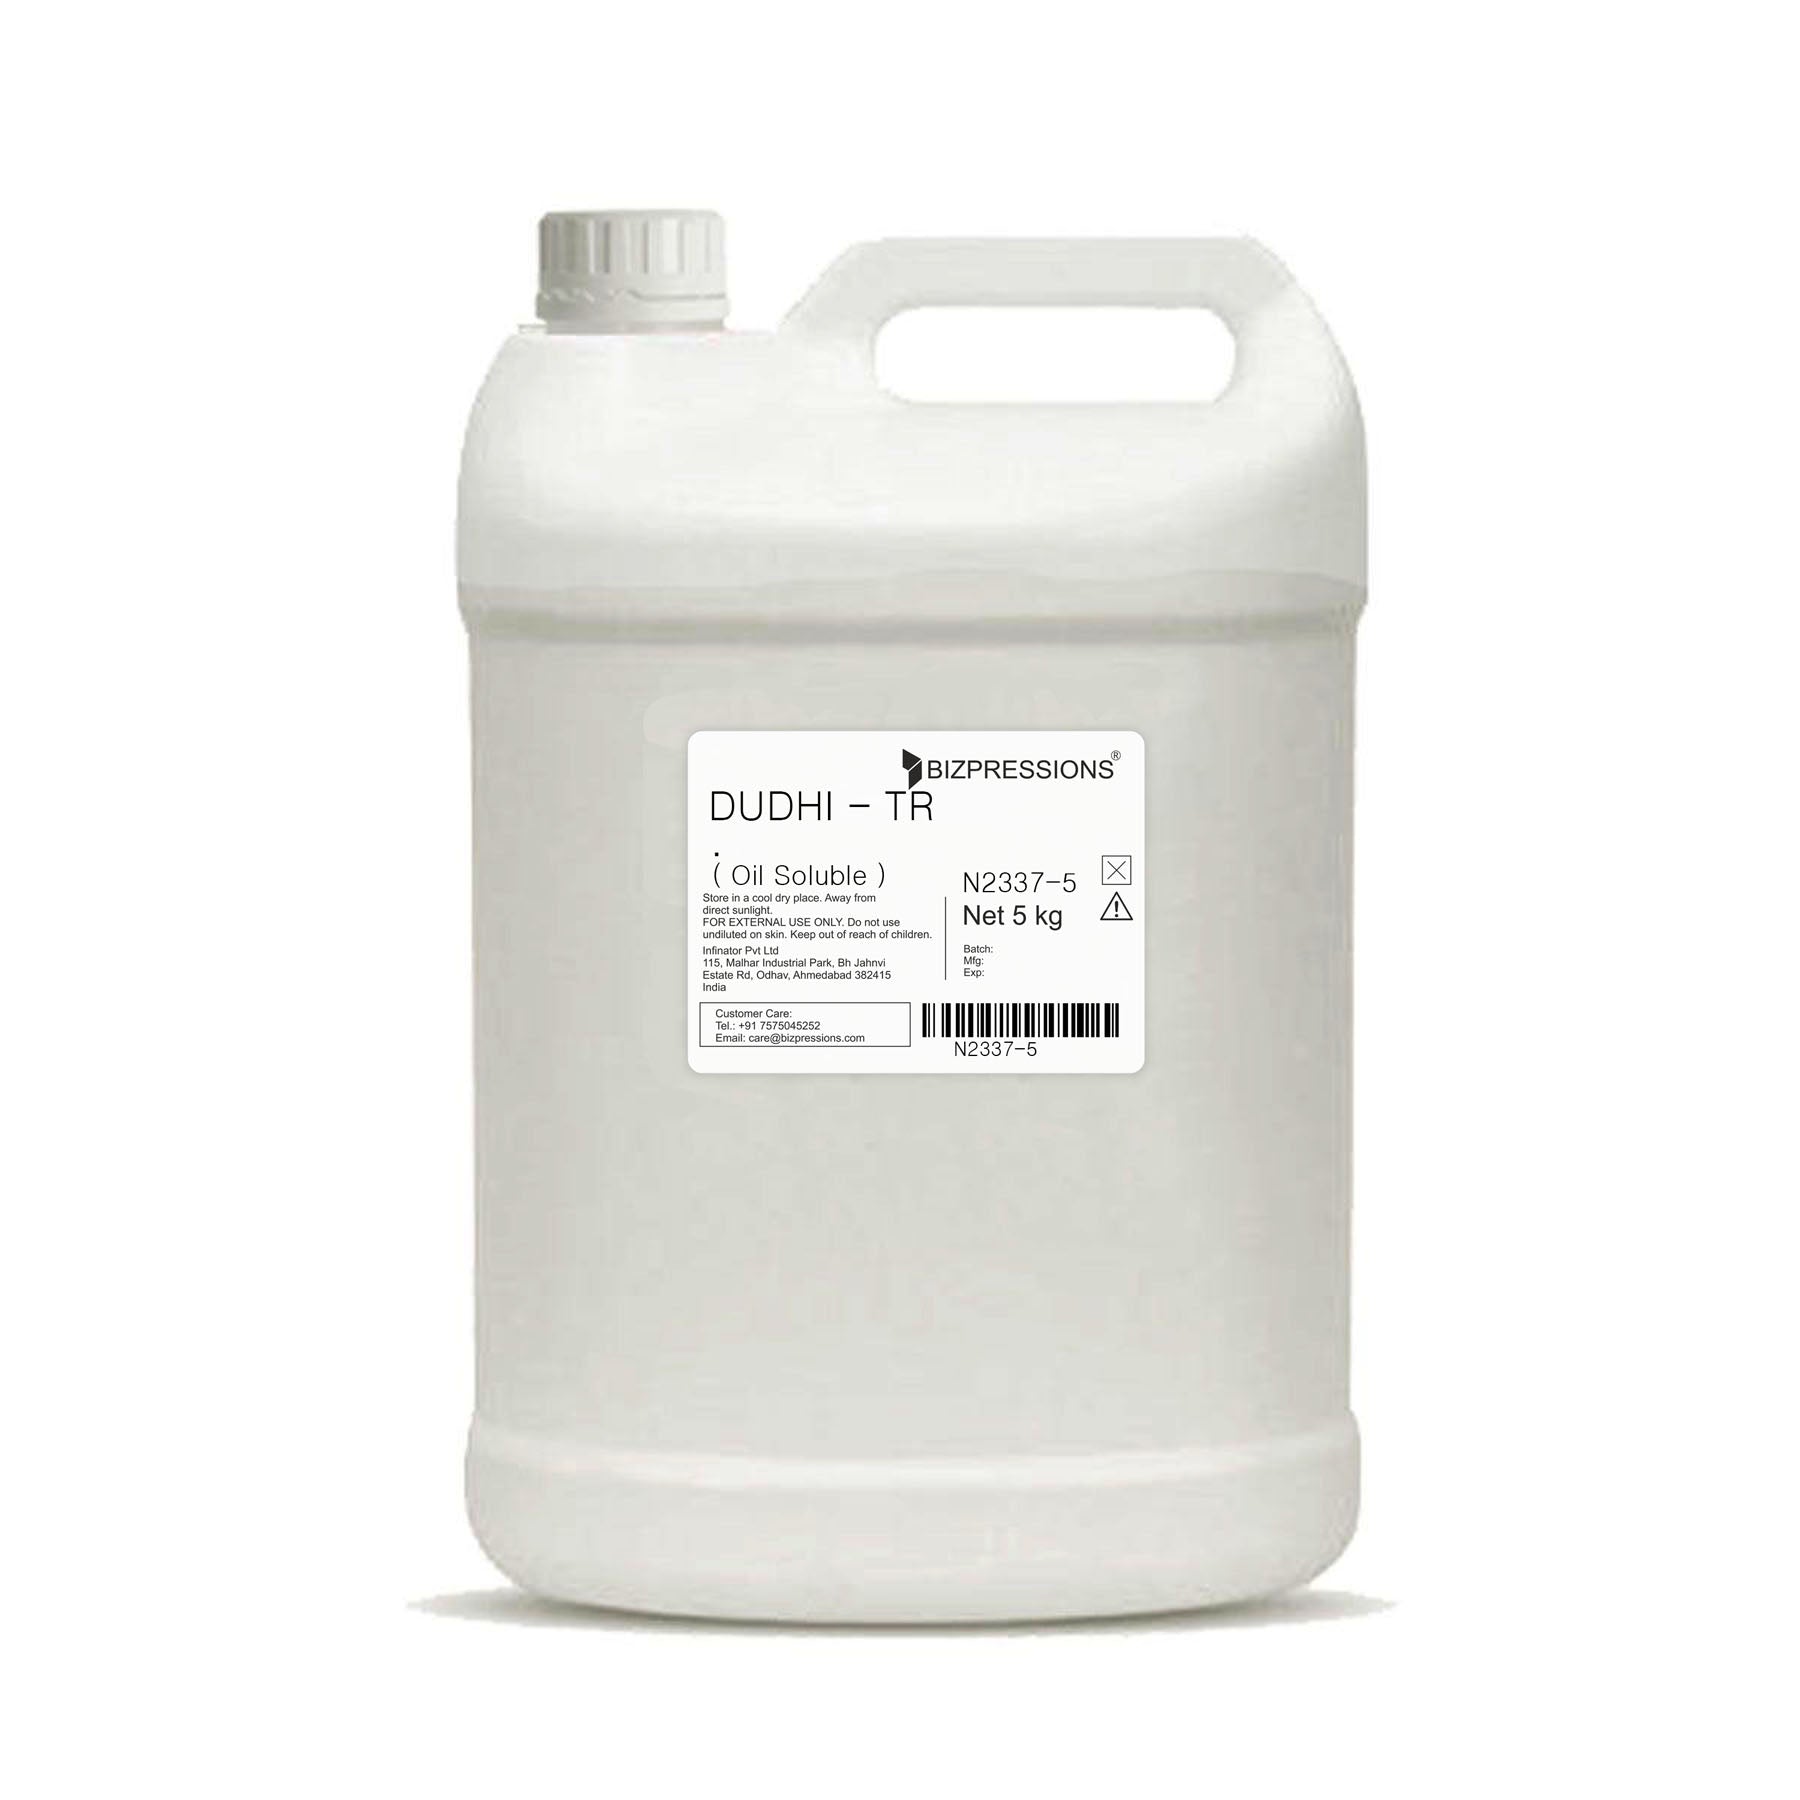 DUDHI - TR - Fragrance ( Oil Soluble ) - 5 kg